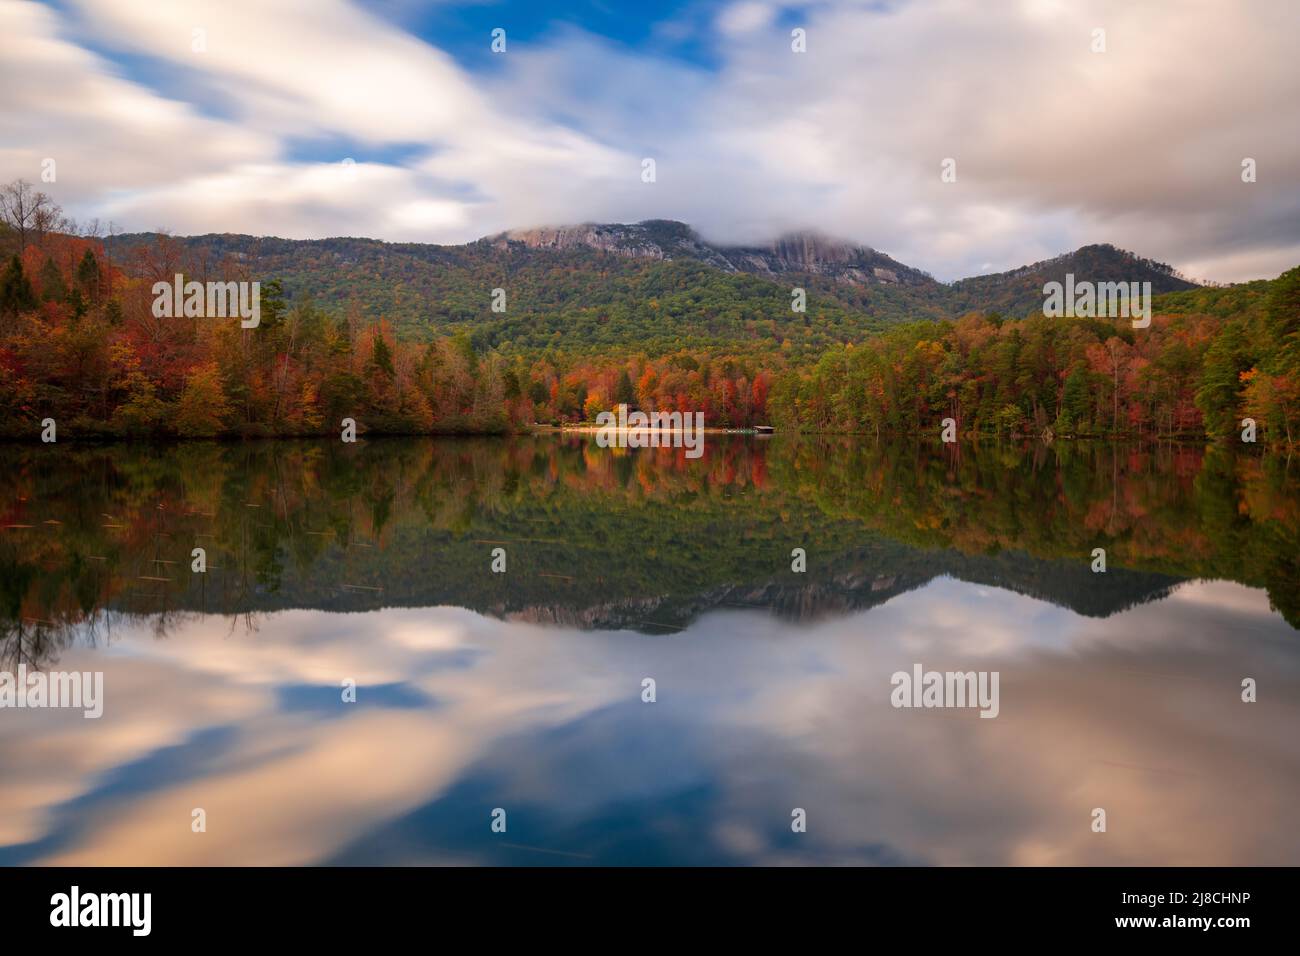 Table Rock Mountain, Pickens, South Carolina, USA lake view in autumn. Stock Photo